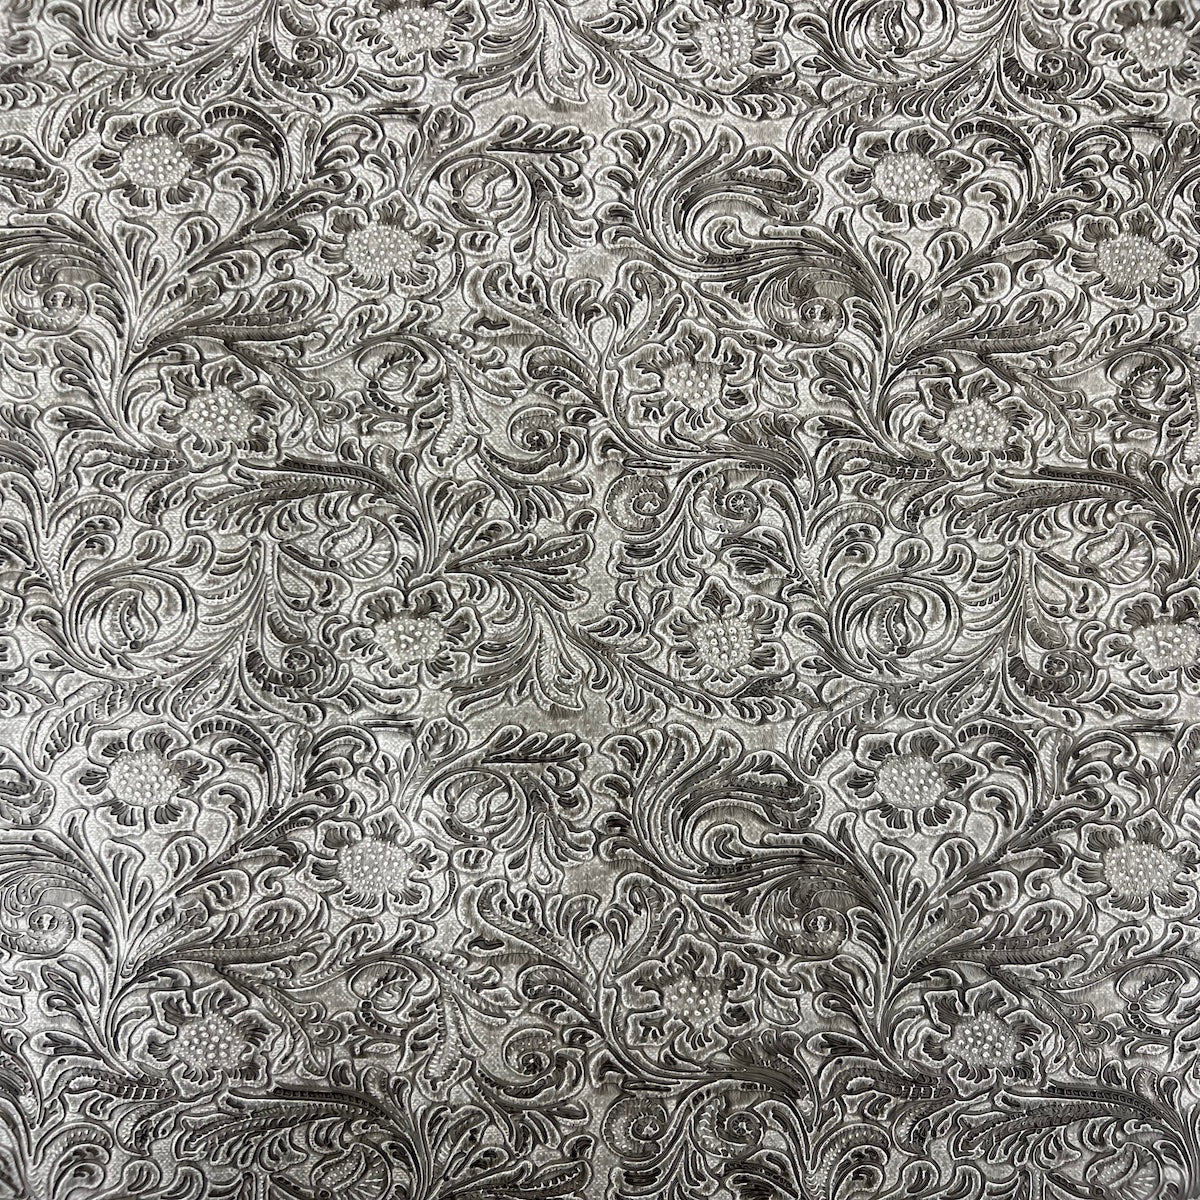 Tela de vinilo de cuero sintético de PU floral occidental gris cemento